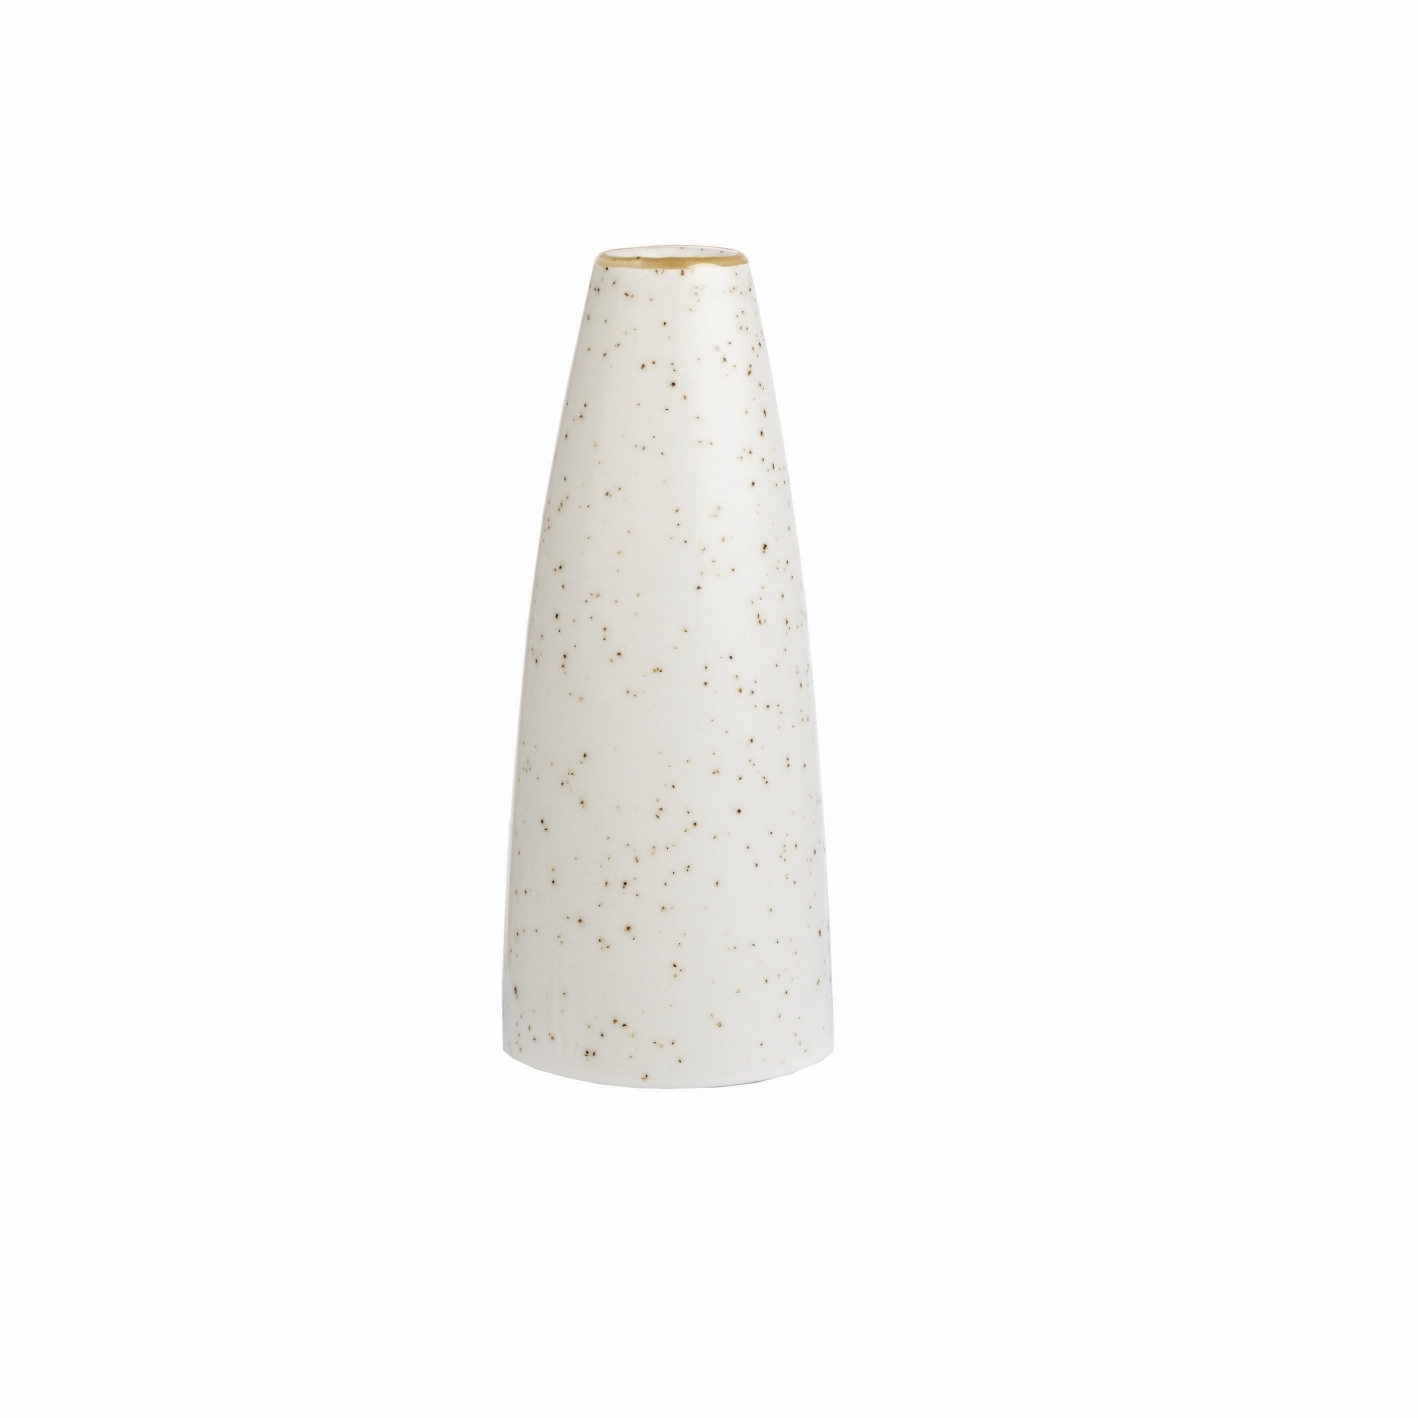 Vase H 12.5 cm, Barley White